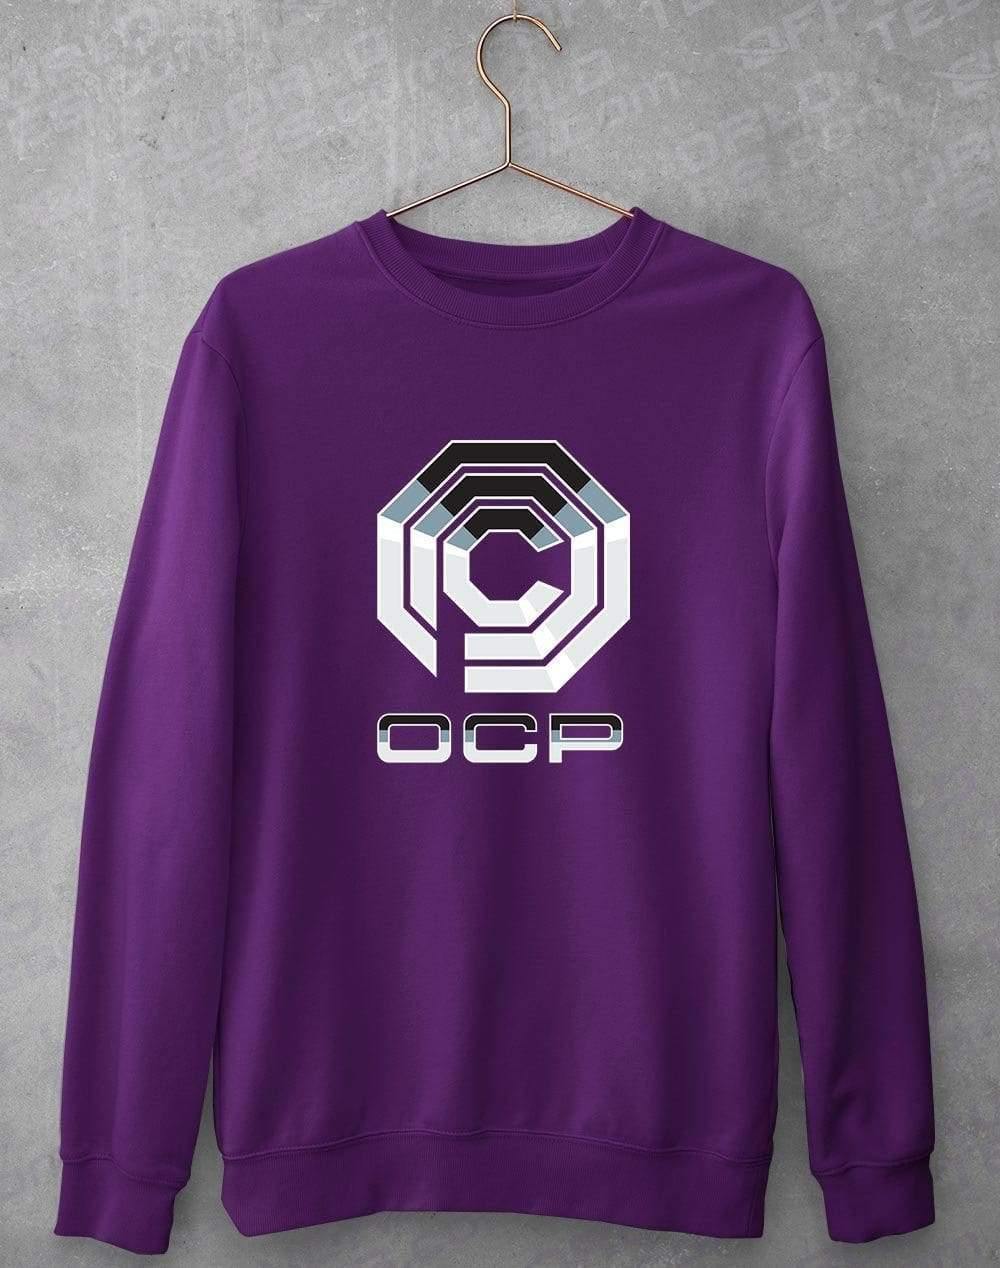 Omni Consumer Products Sweatshirt S / Purple  - Off World Tees